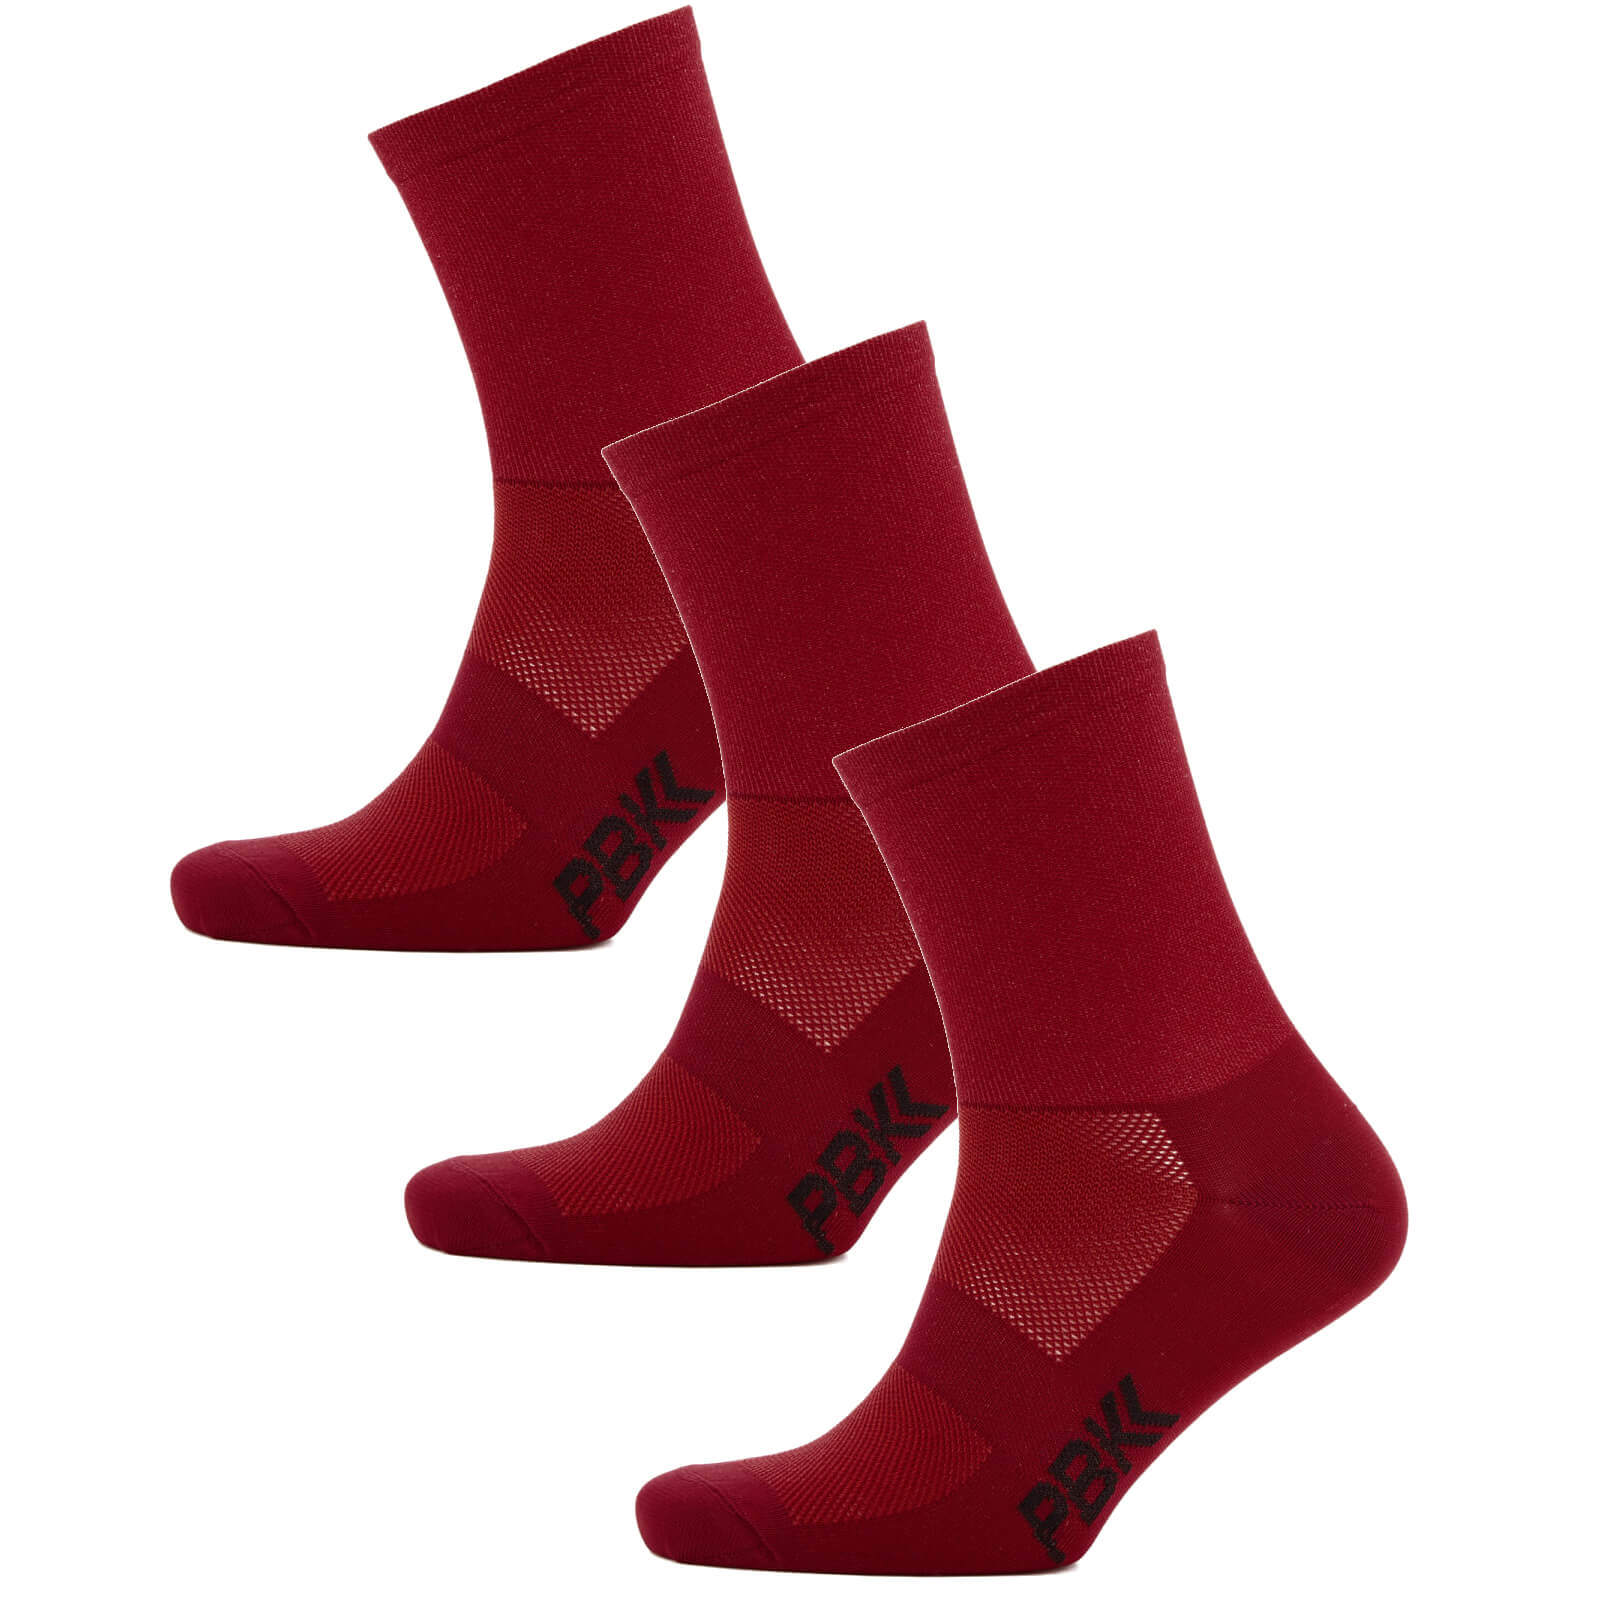 PBK Lightweight Socks Multipack - 3 Pairs - Red - L-XL